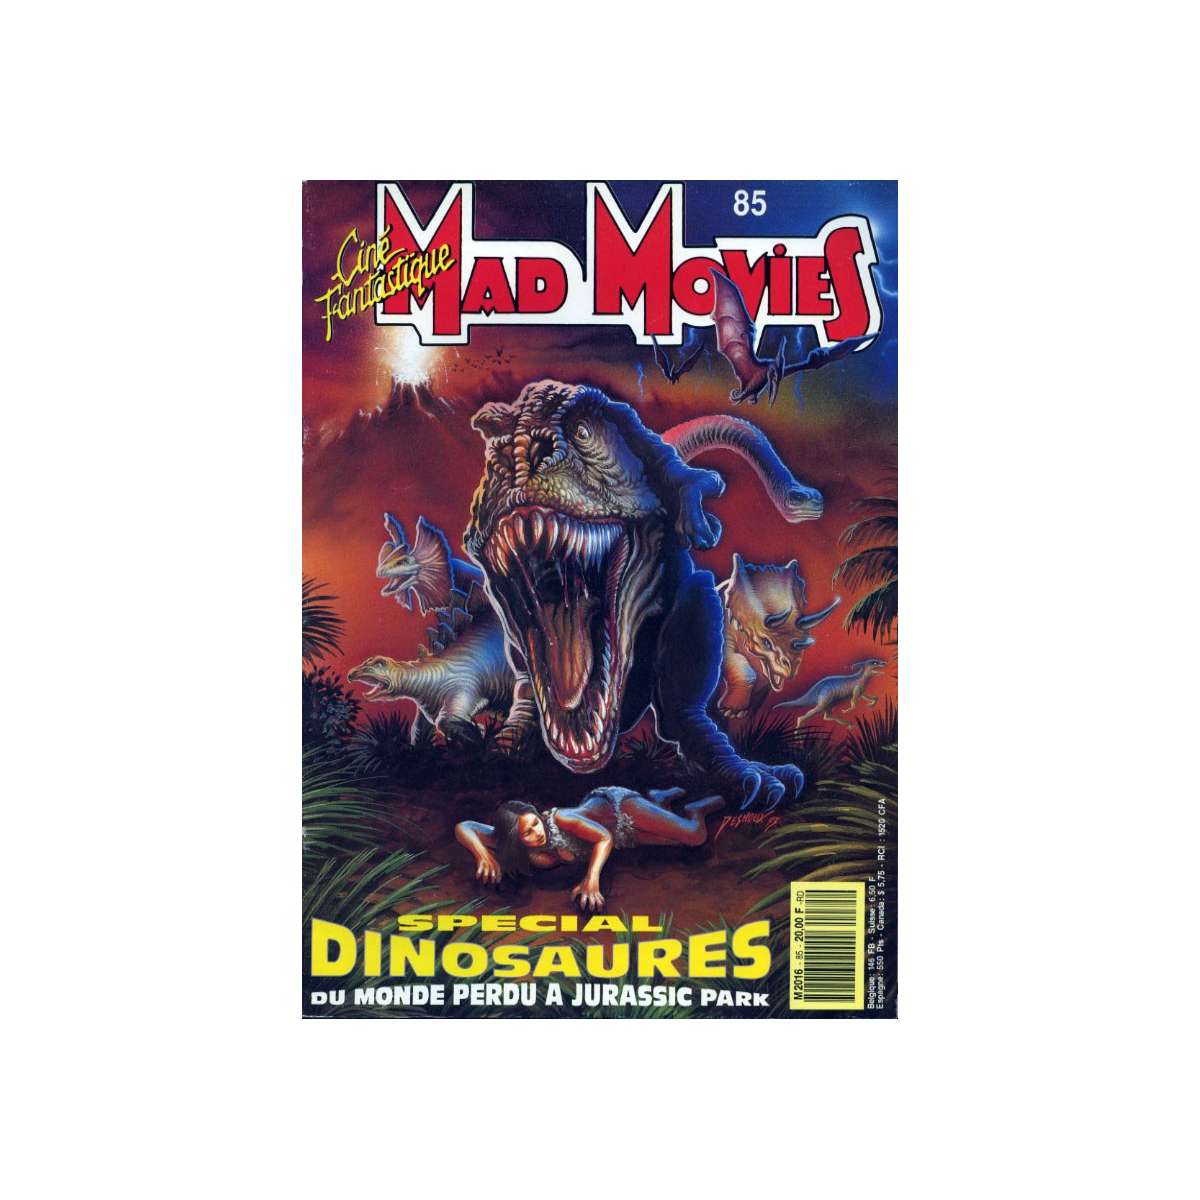 septembre 93 Stallone spécial dinosaures Magazine Mad Movies 85 